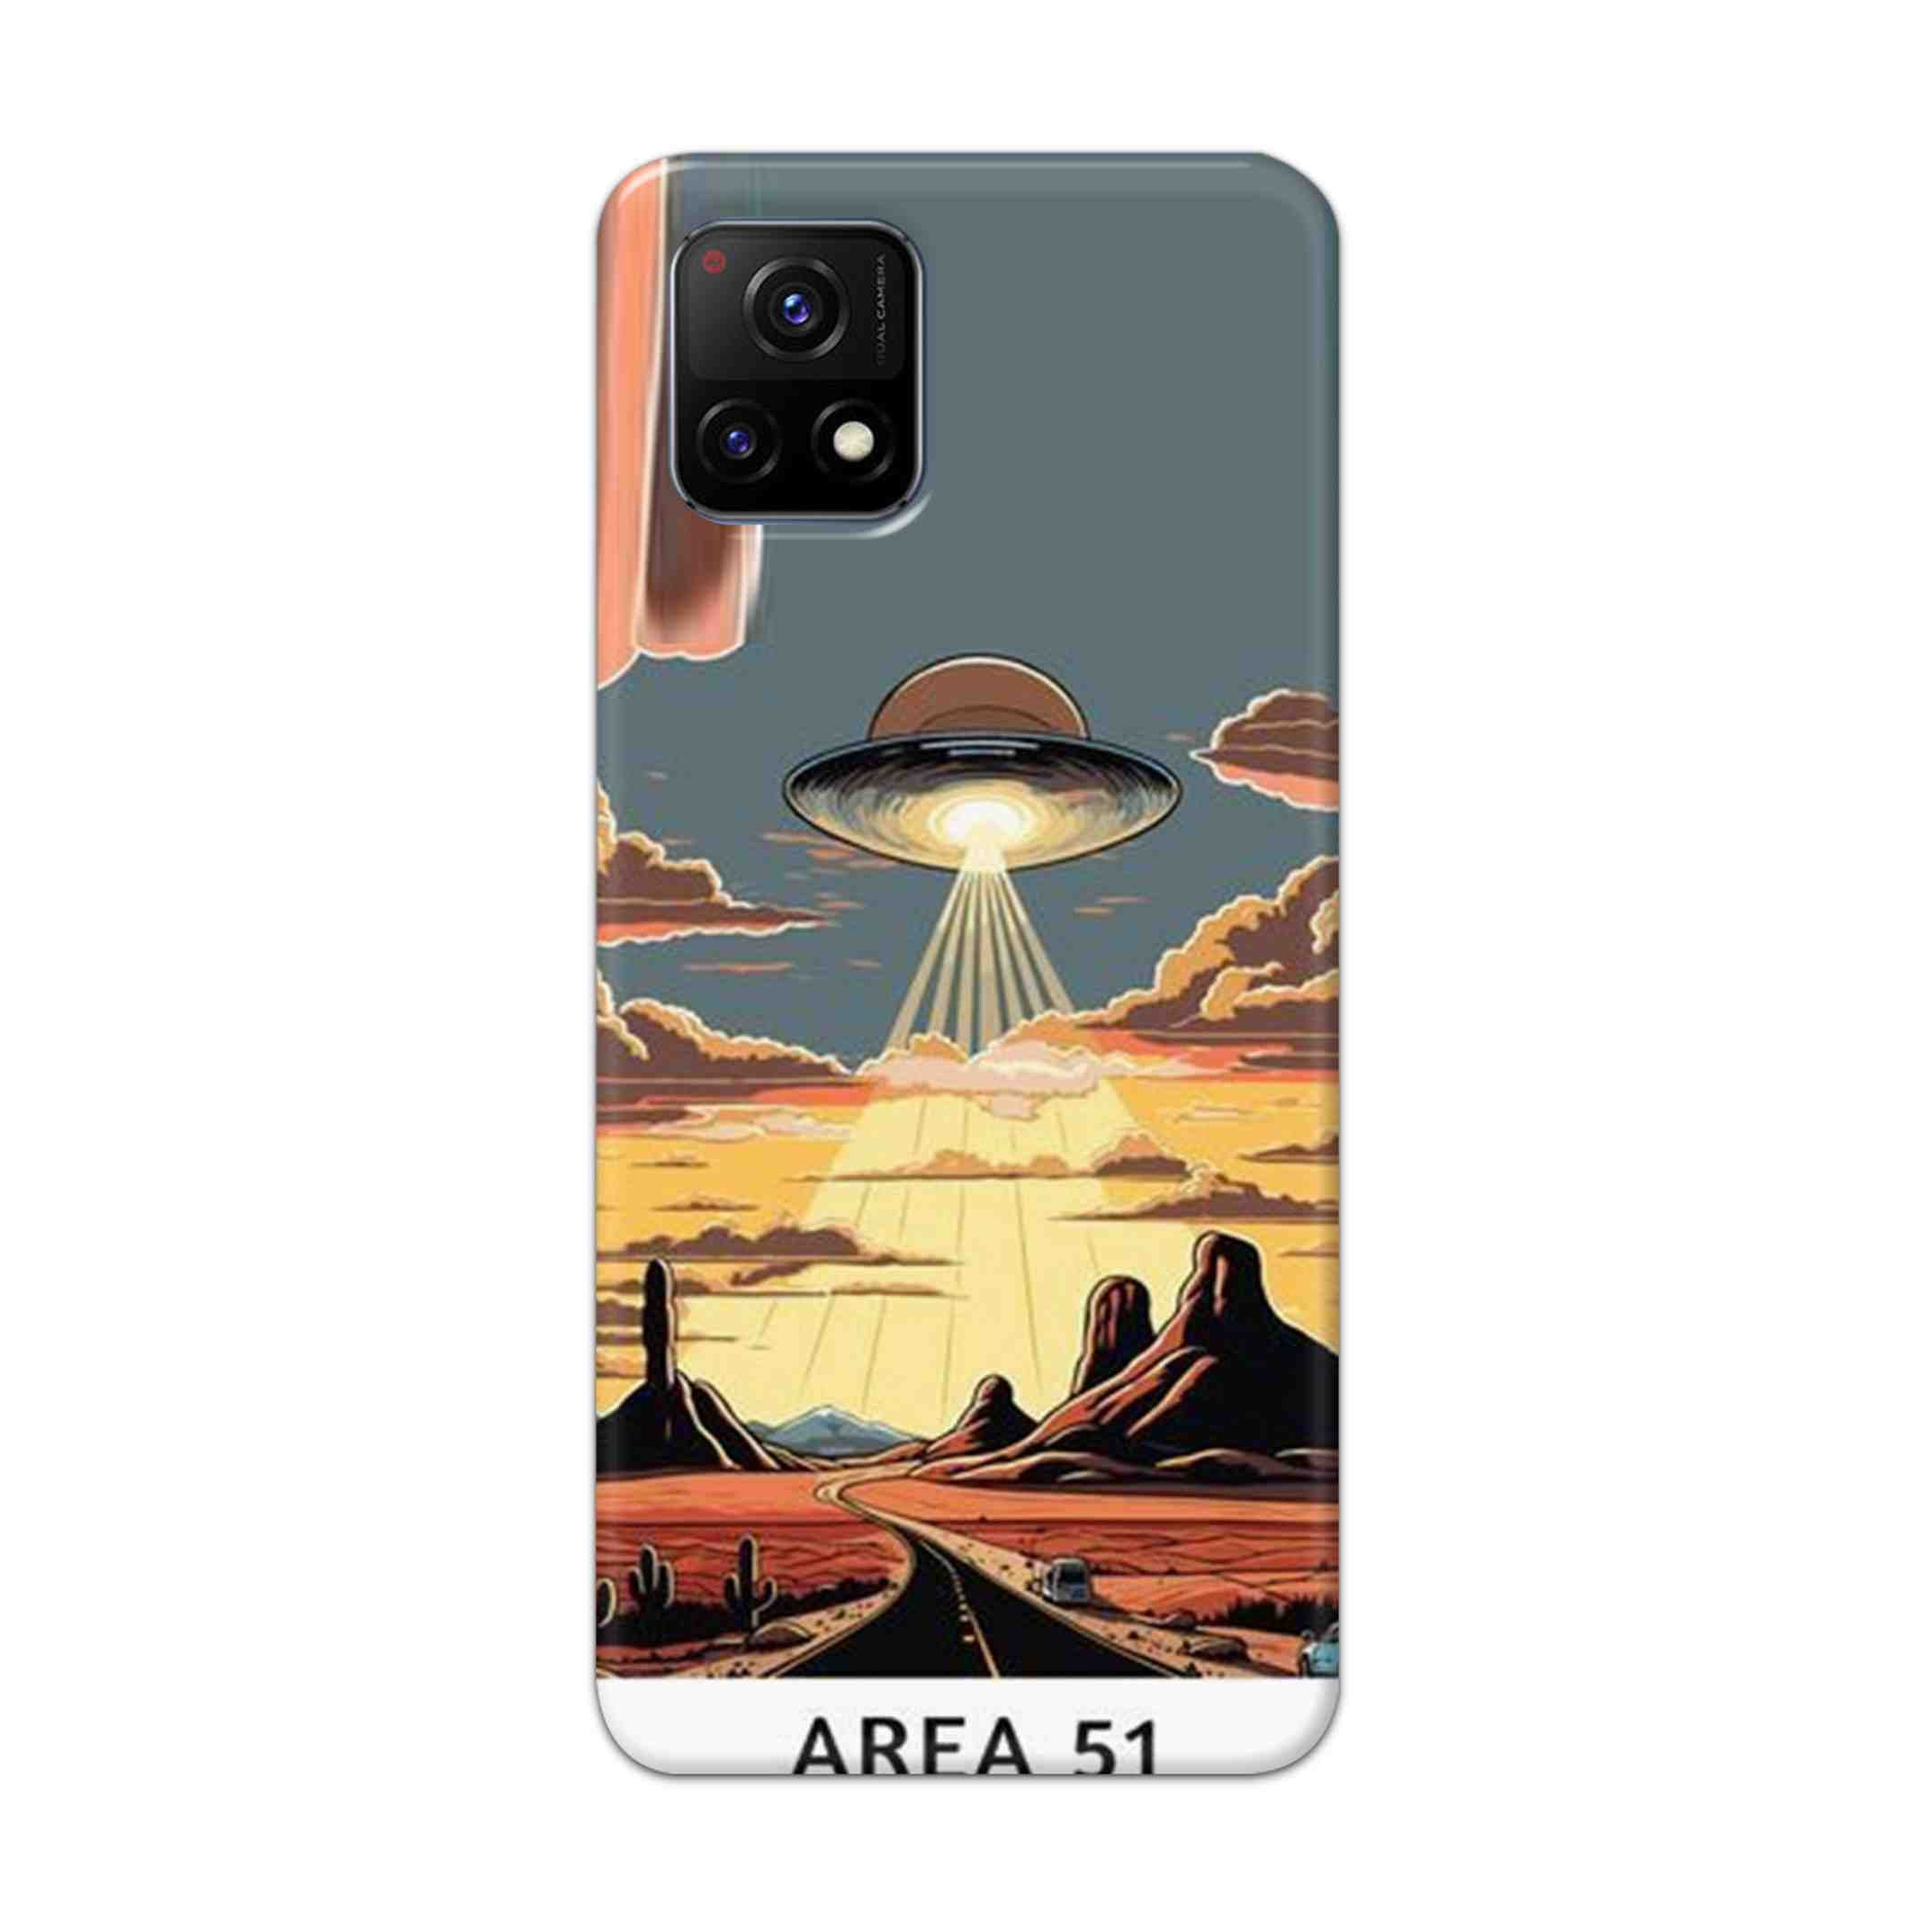 Buy Area 51 Hard Back Mobile Phone Case Cover For Vivo Y72 5G Online